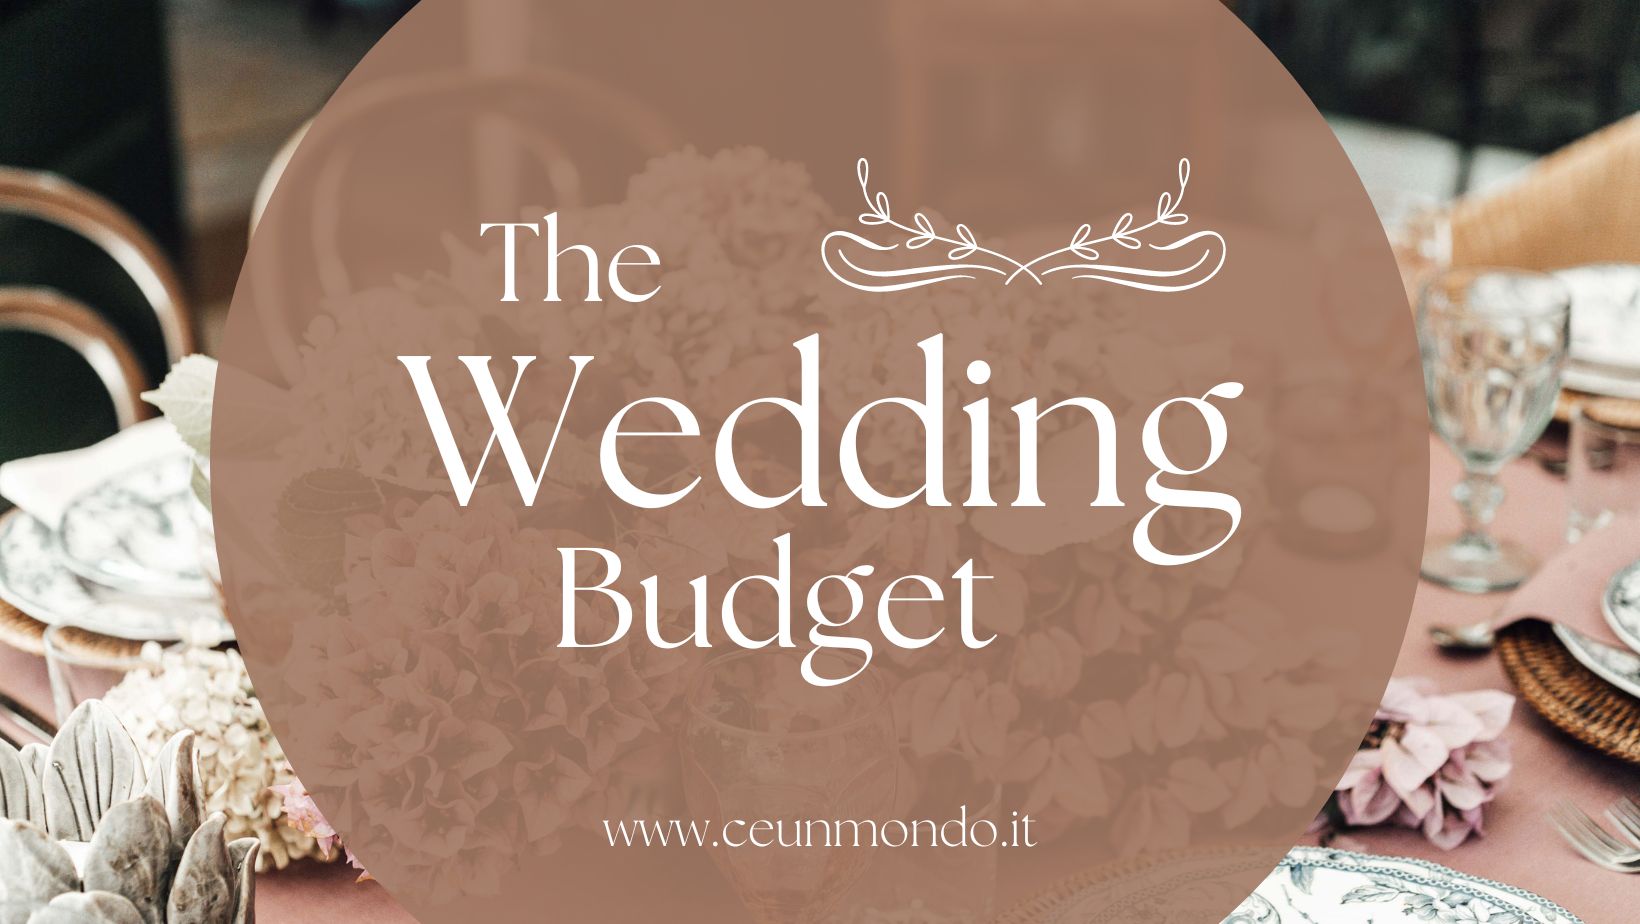 Creare bomboniere fai da te - Matrimonio a Bologna Blog